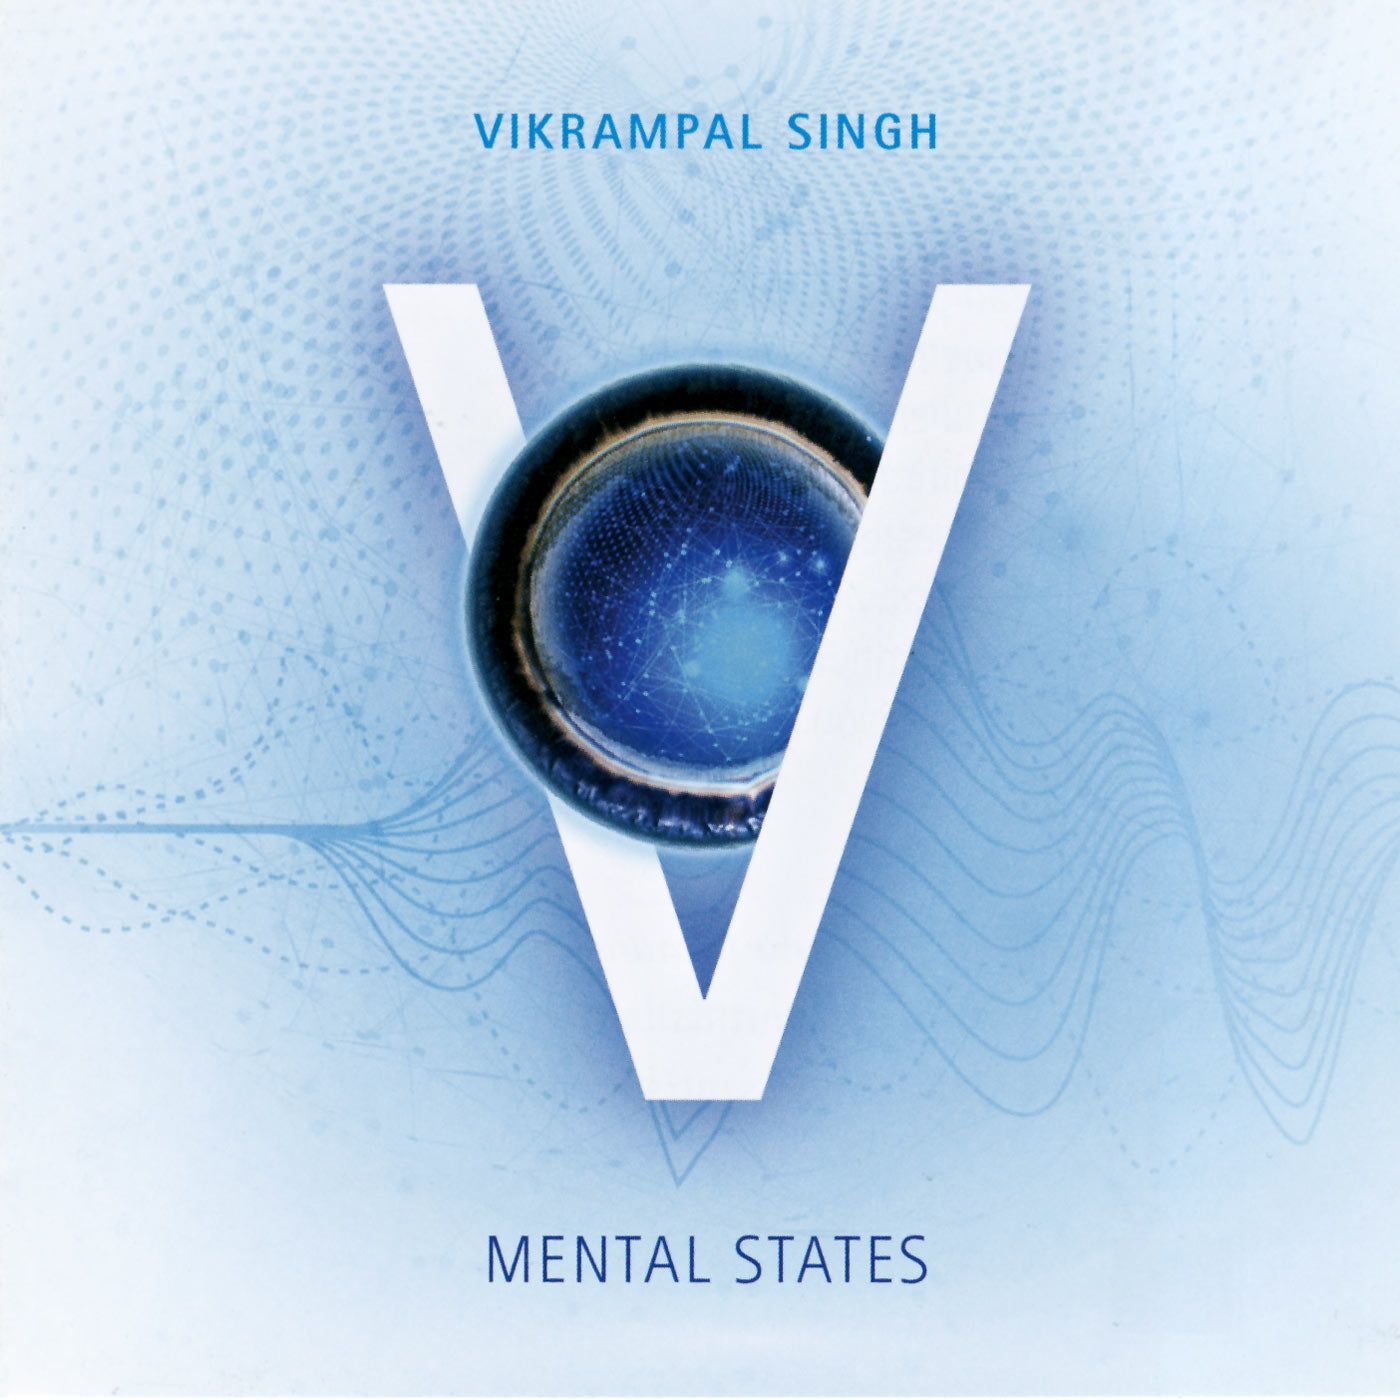 Mental States - Vikrampal Singh complete